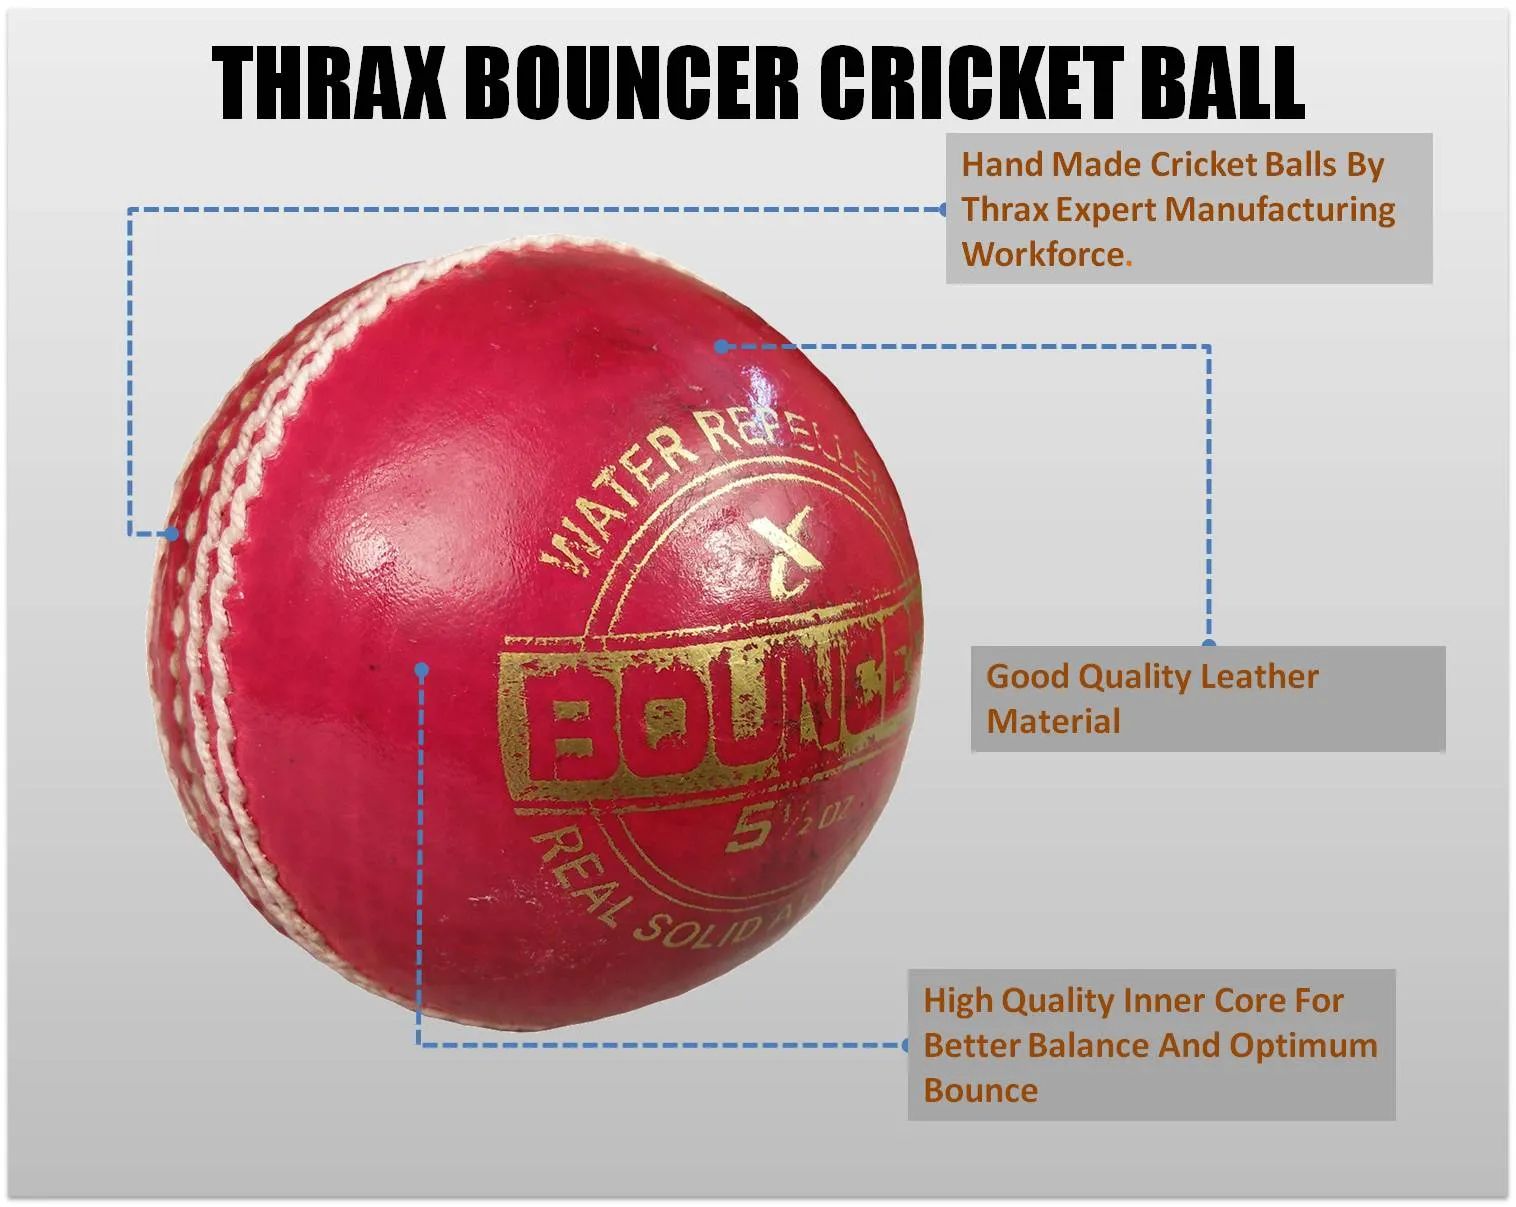 THRAX_BOUNCER_CRICKET_BALL.jpg